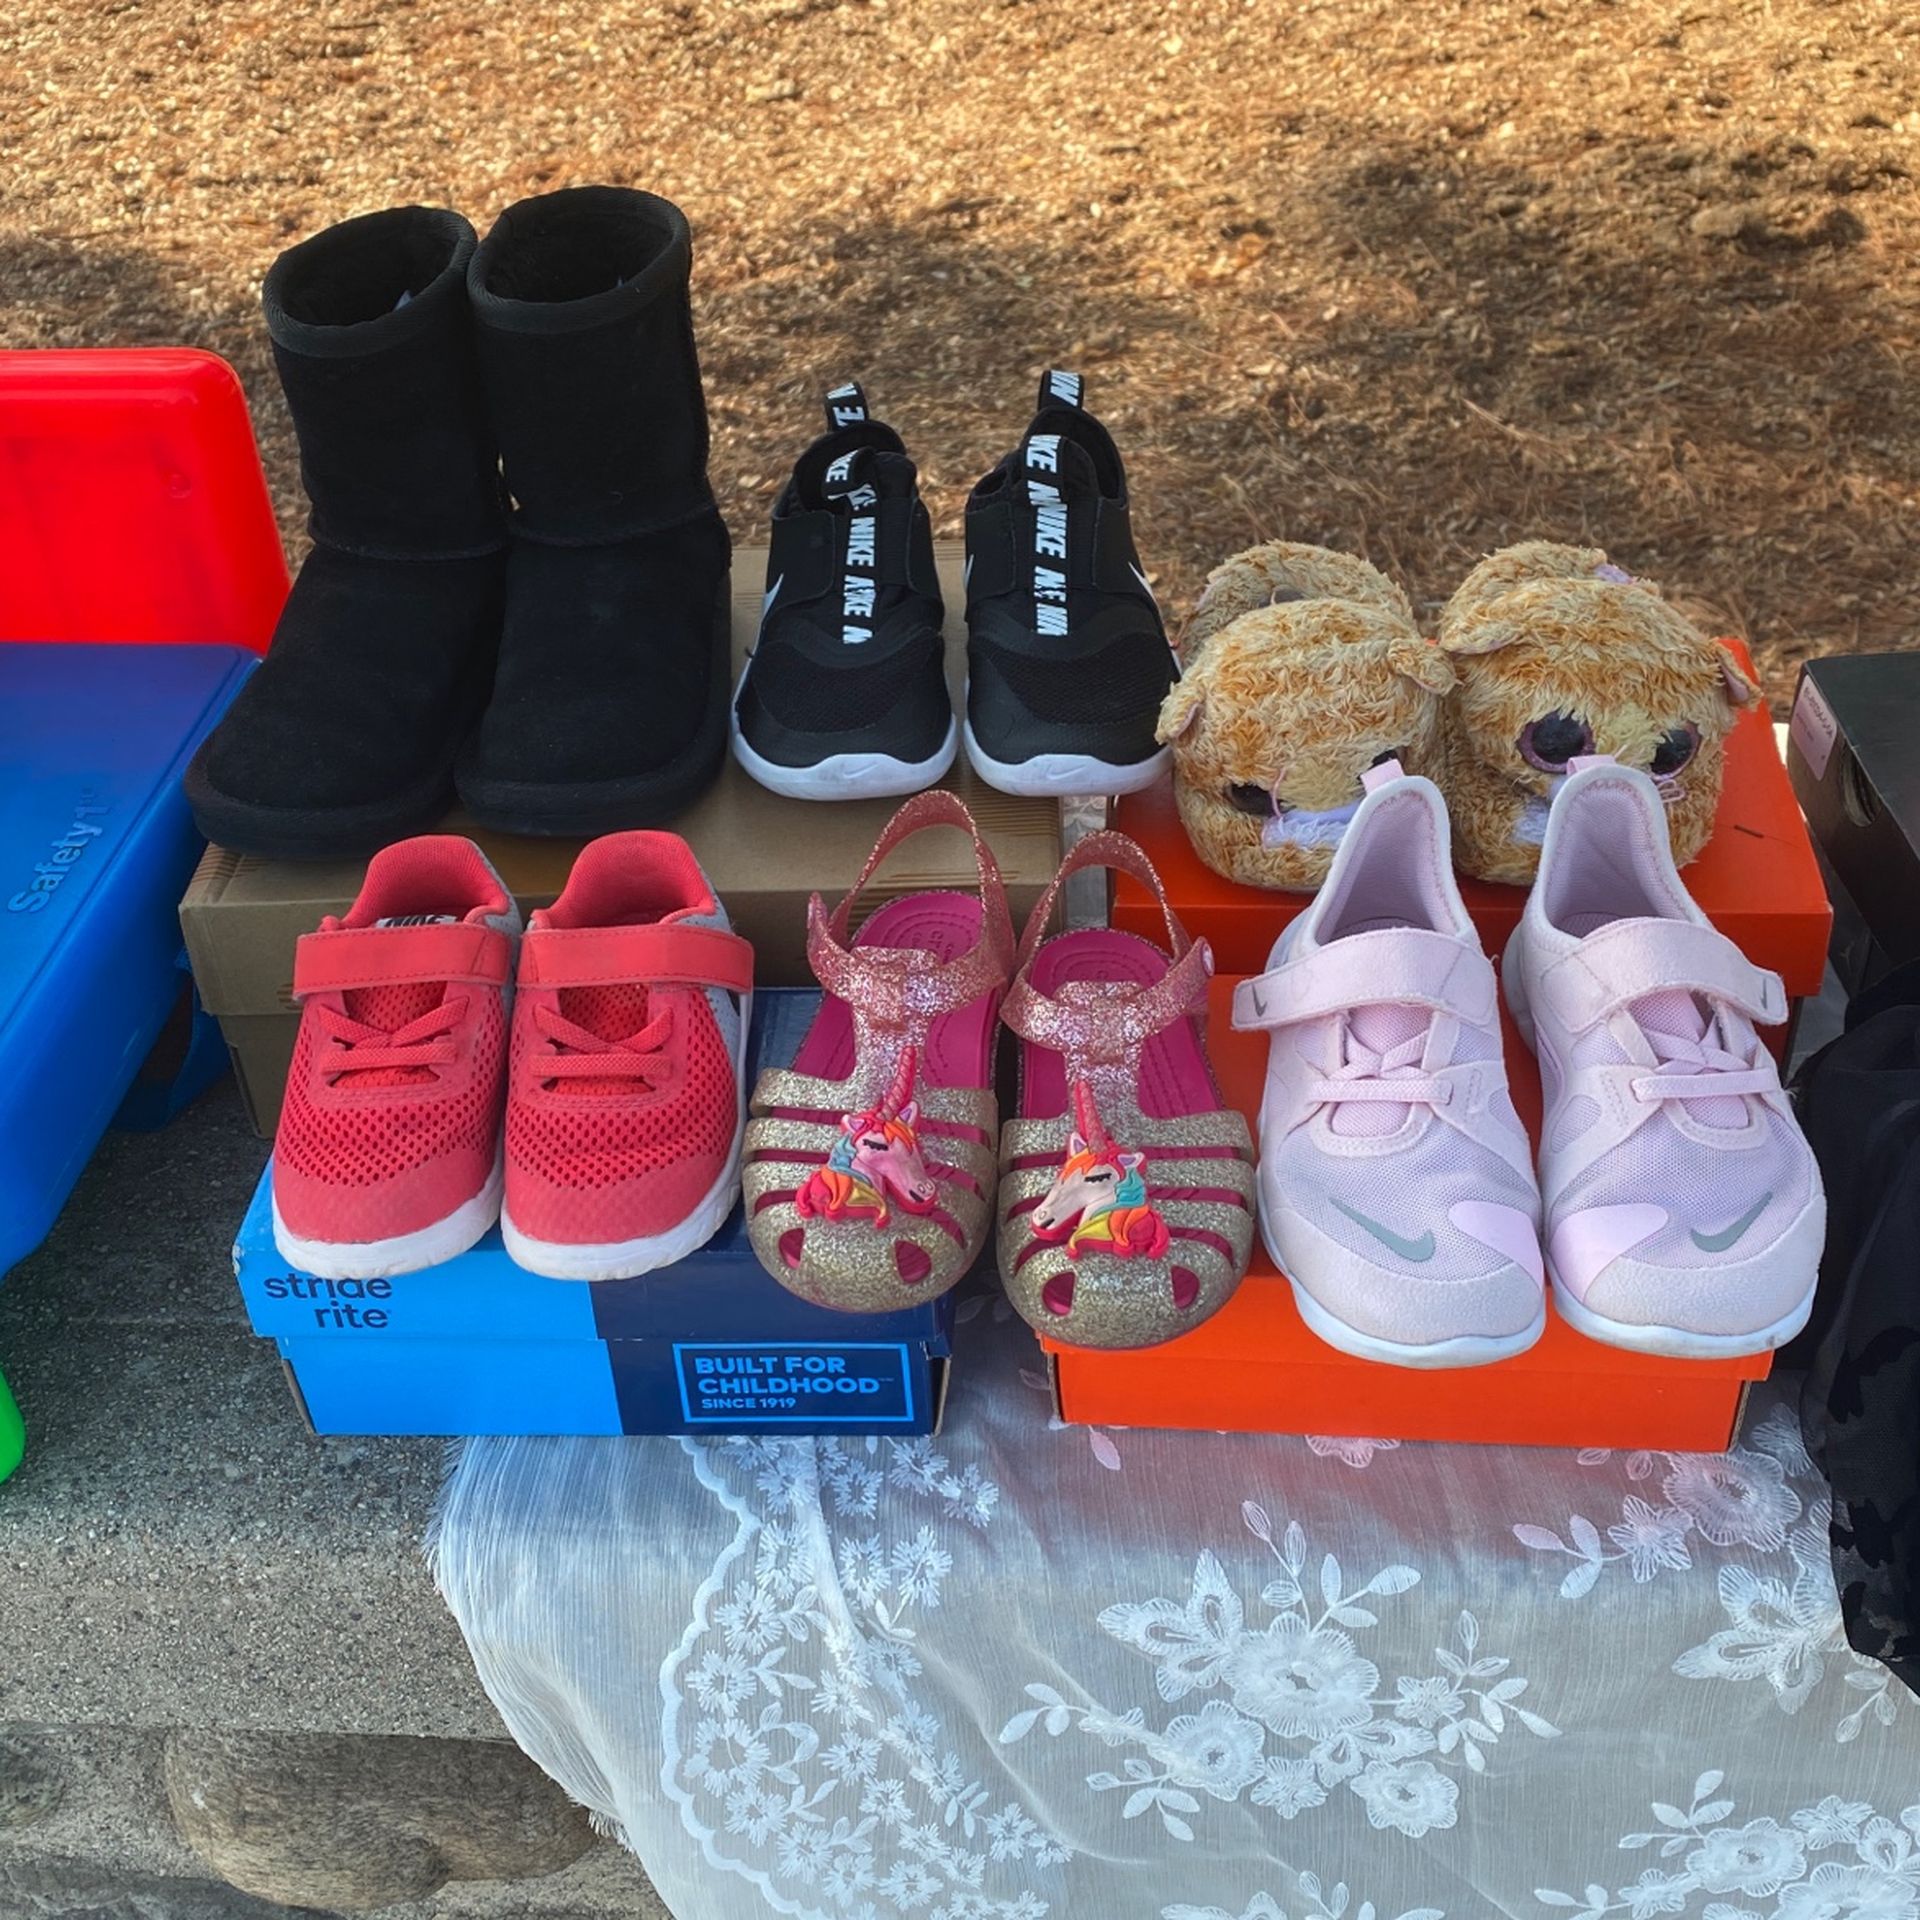 Random Kids Stuff, Shoes And Clothes